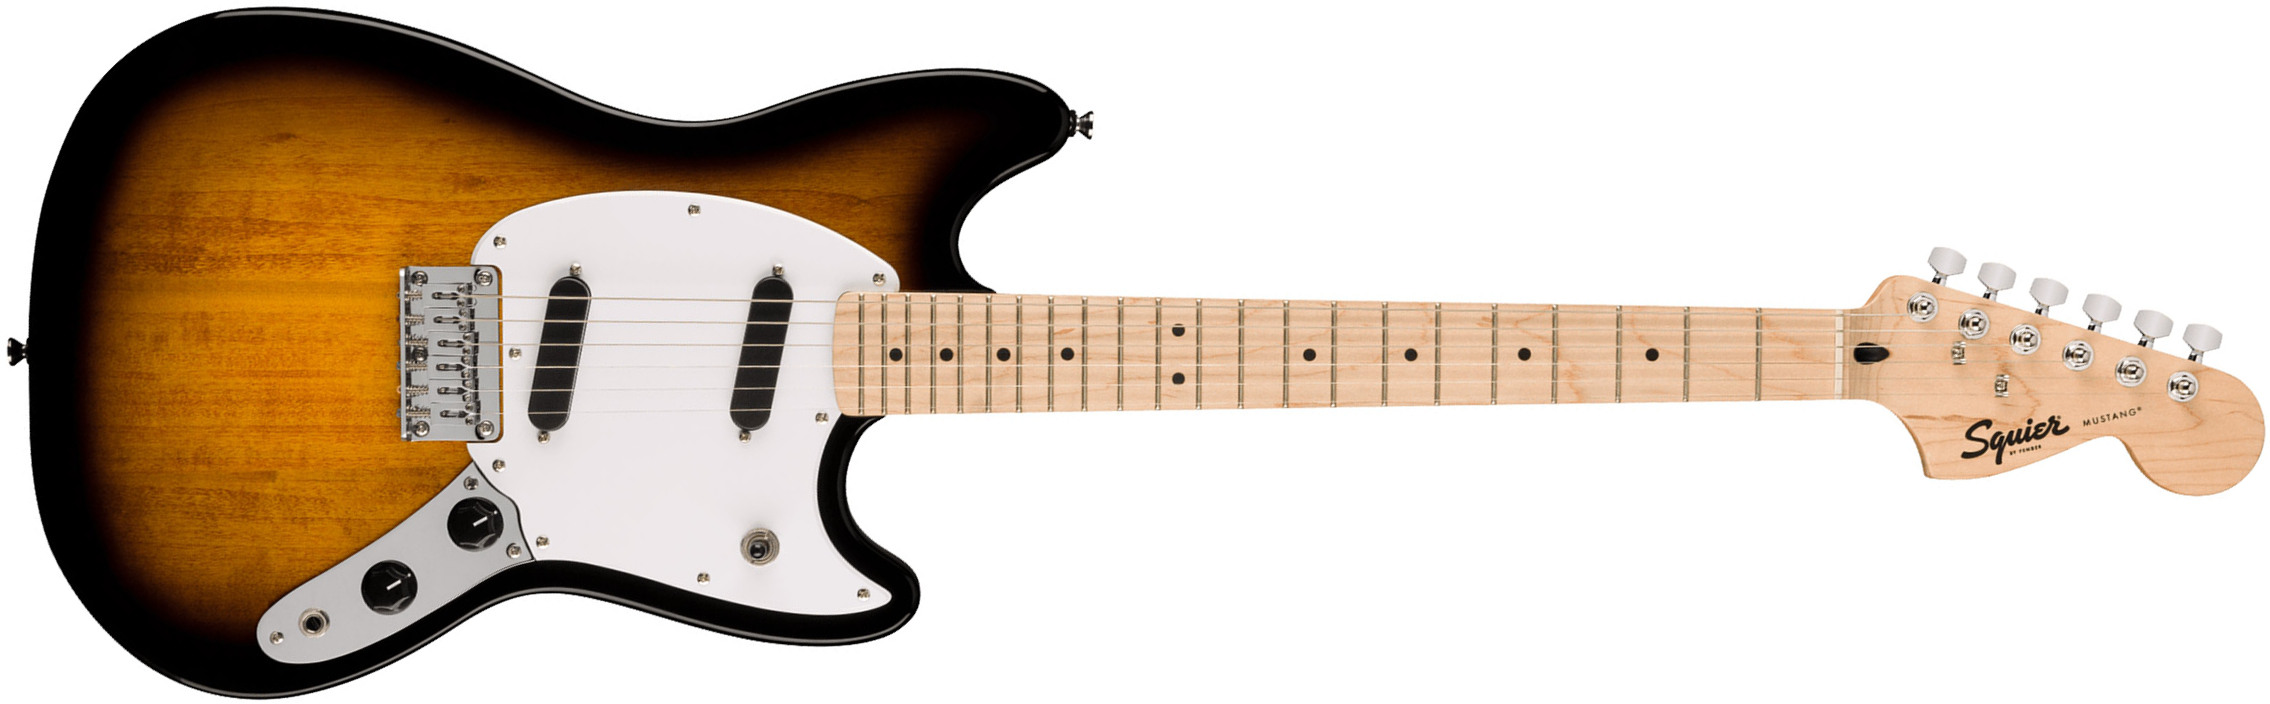 Squier Mustang Sonic 2s Ht Mn - 2-color Sunburst - Guitarra electrica retro rock - Main picture